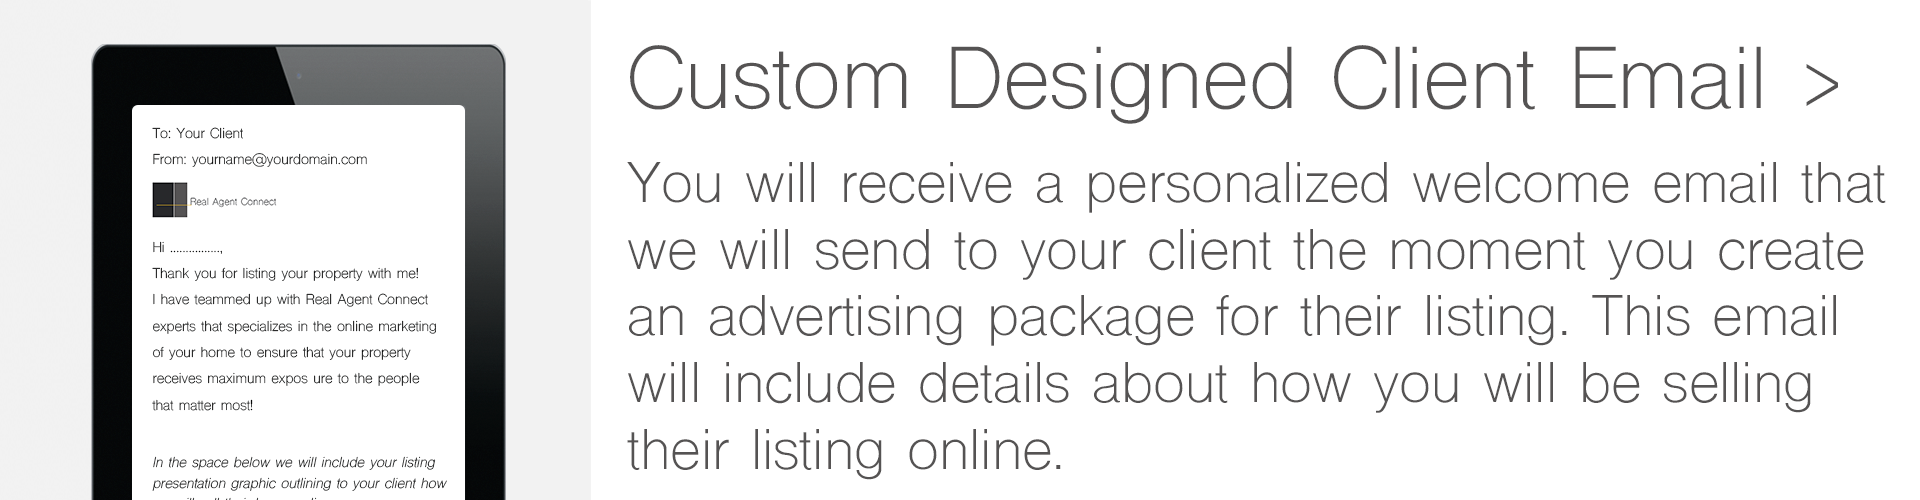 Custom-Designed-Client-Email-long